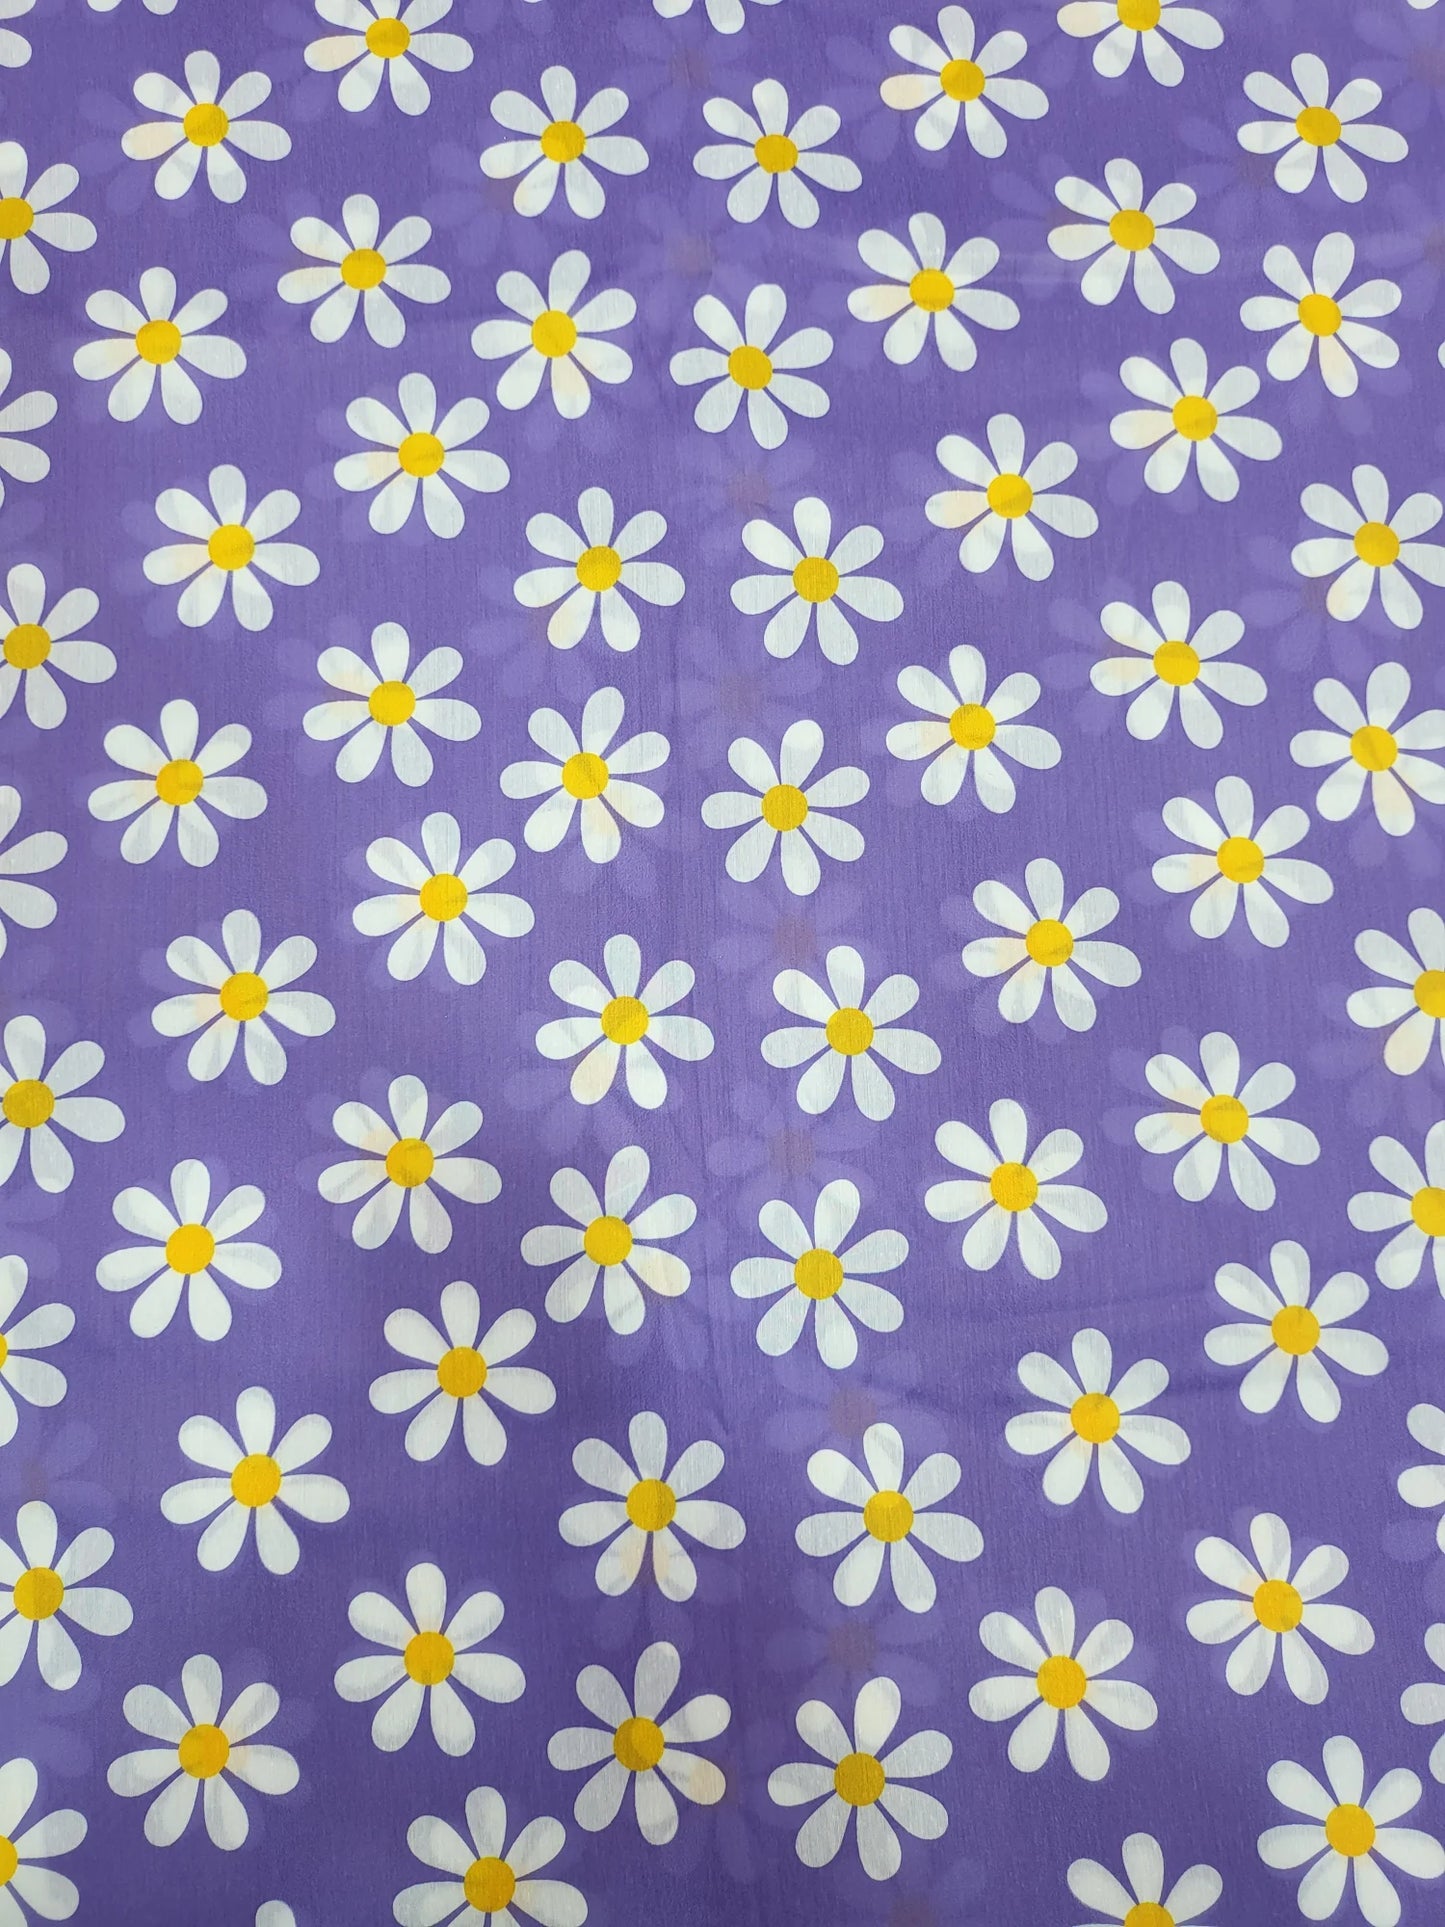 Floral Digital Print Muslin Fabric